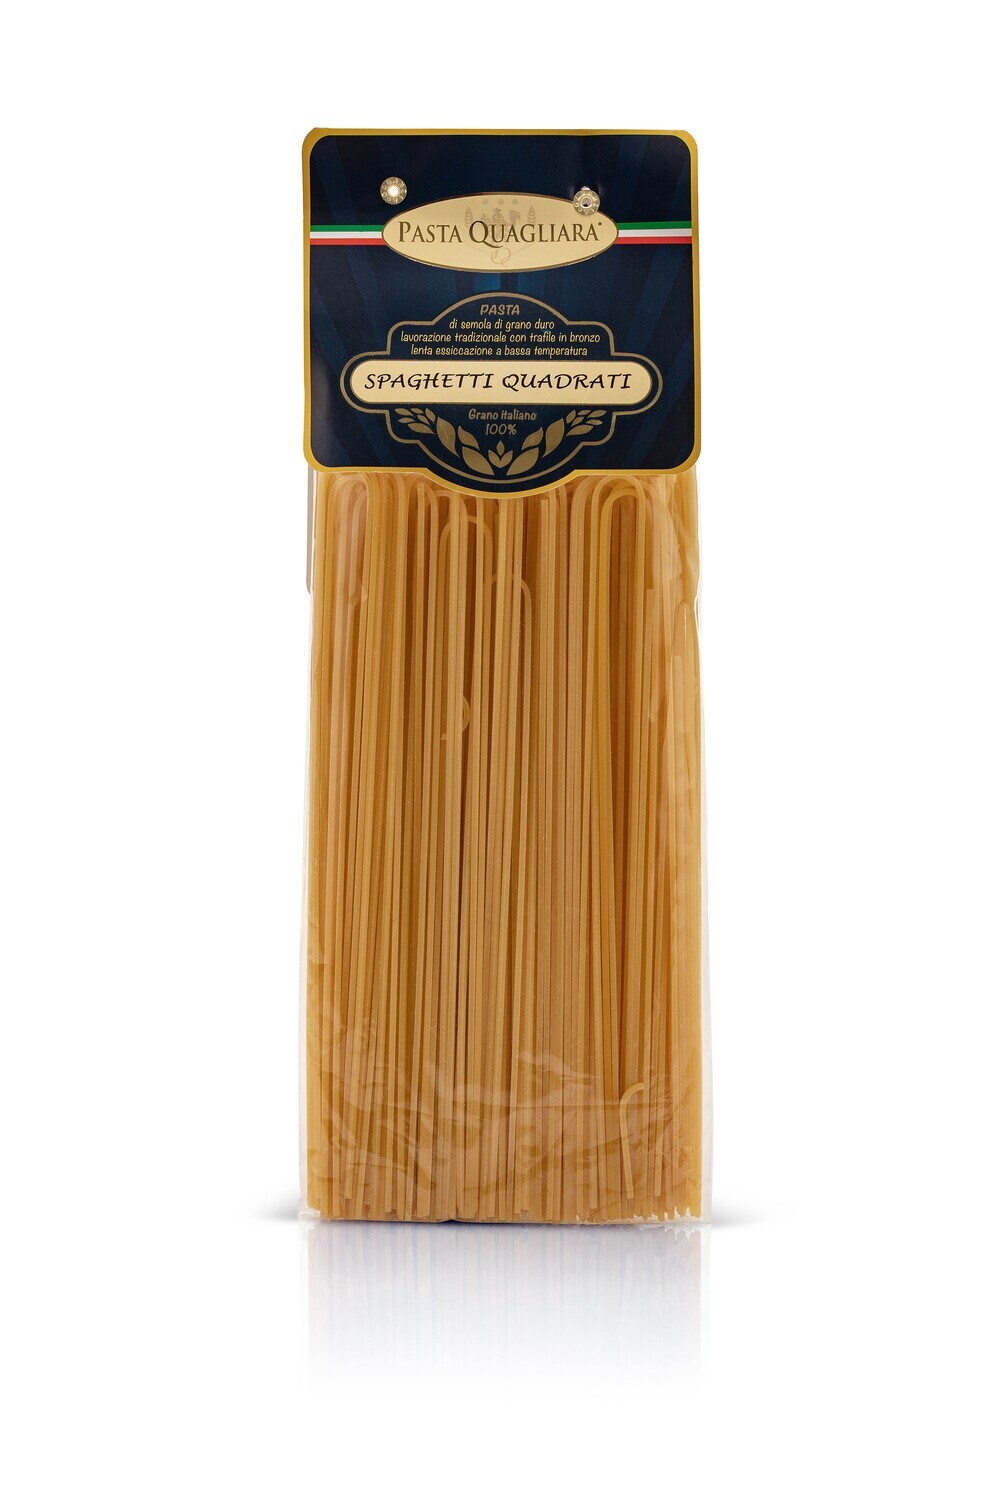 Spaghetti quadrati 500g